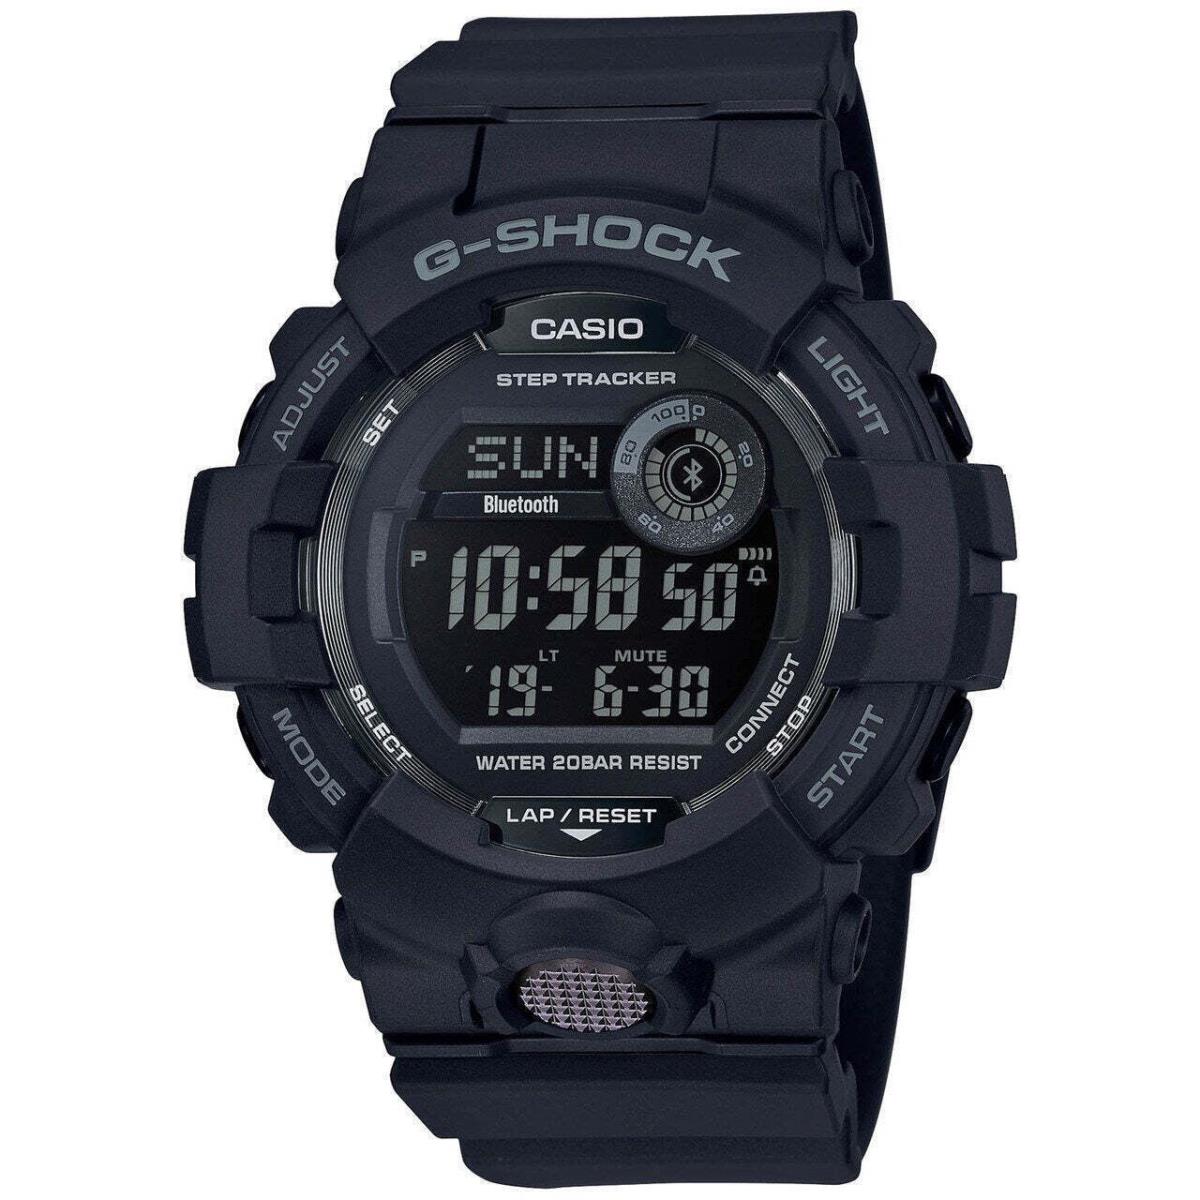 G-shock GBD800 Bluetooth Activity Tracker Black Grey Watch